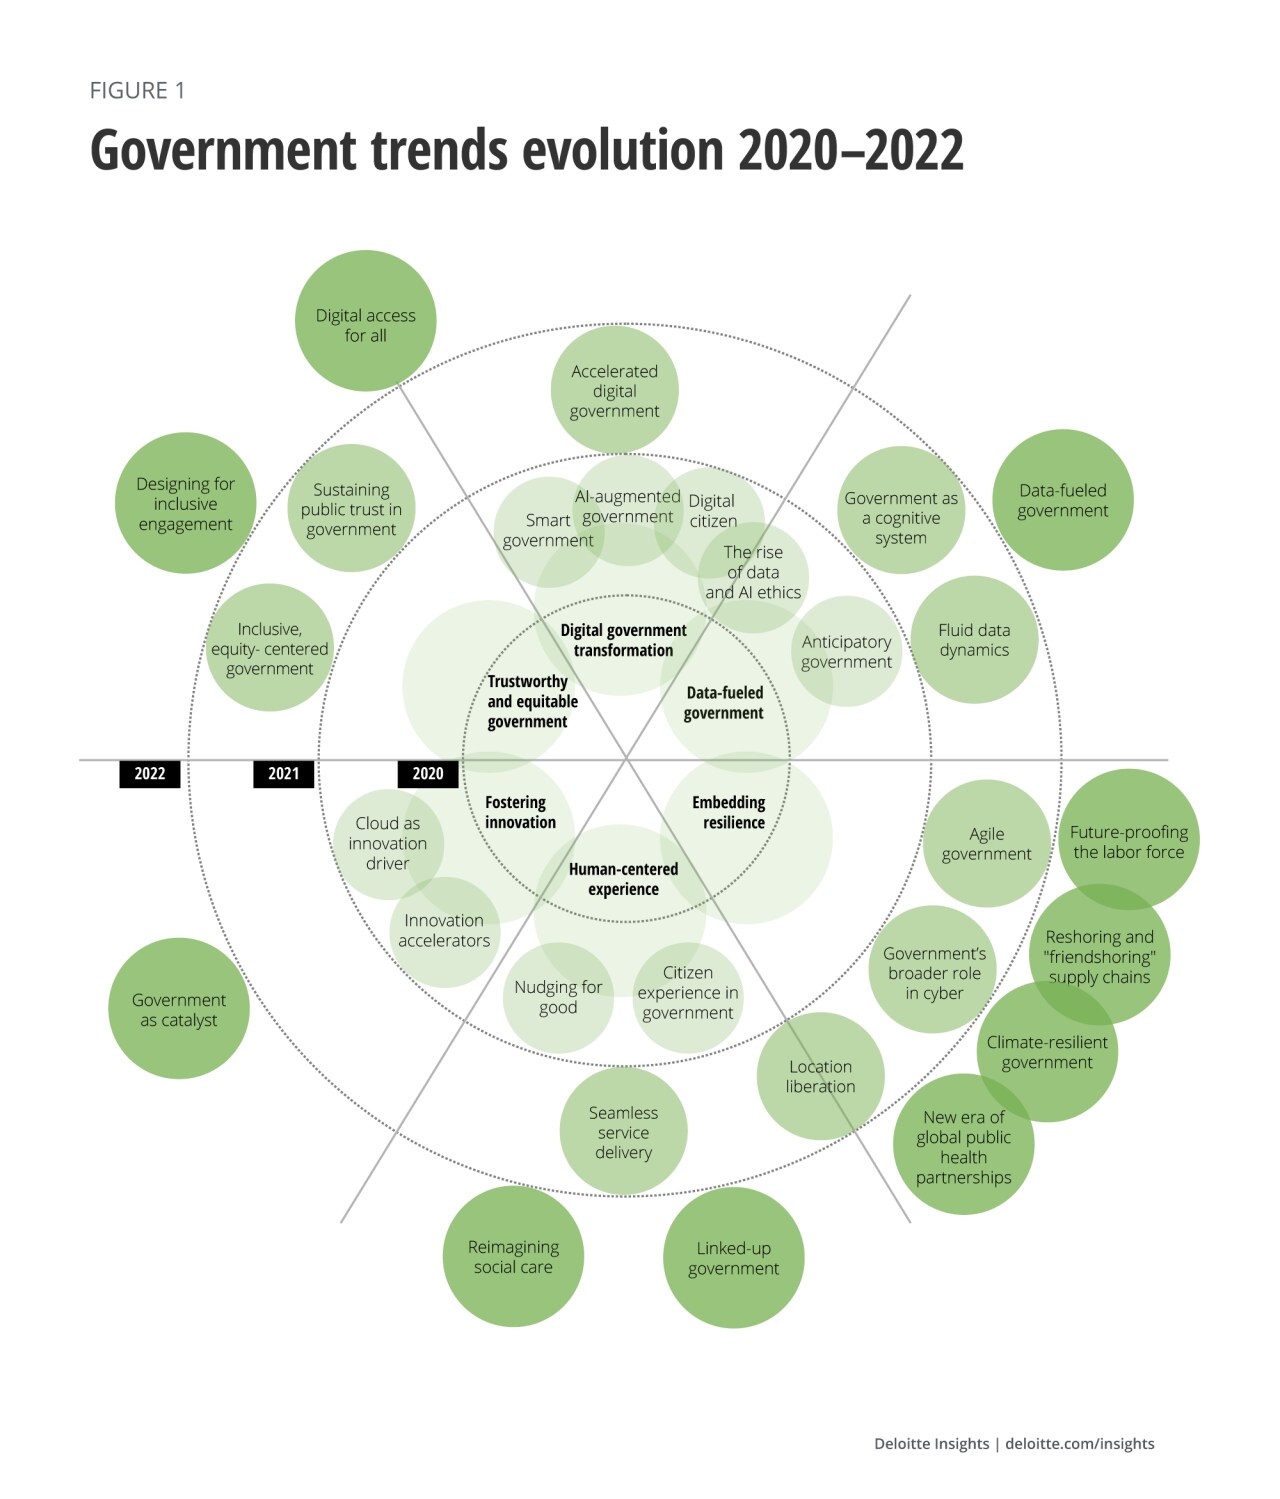 Figure 1. Government trends evolution 2020-2022